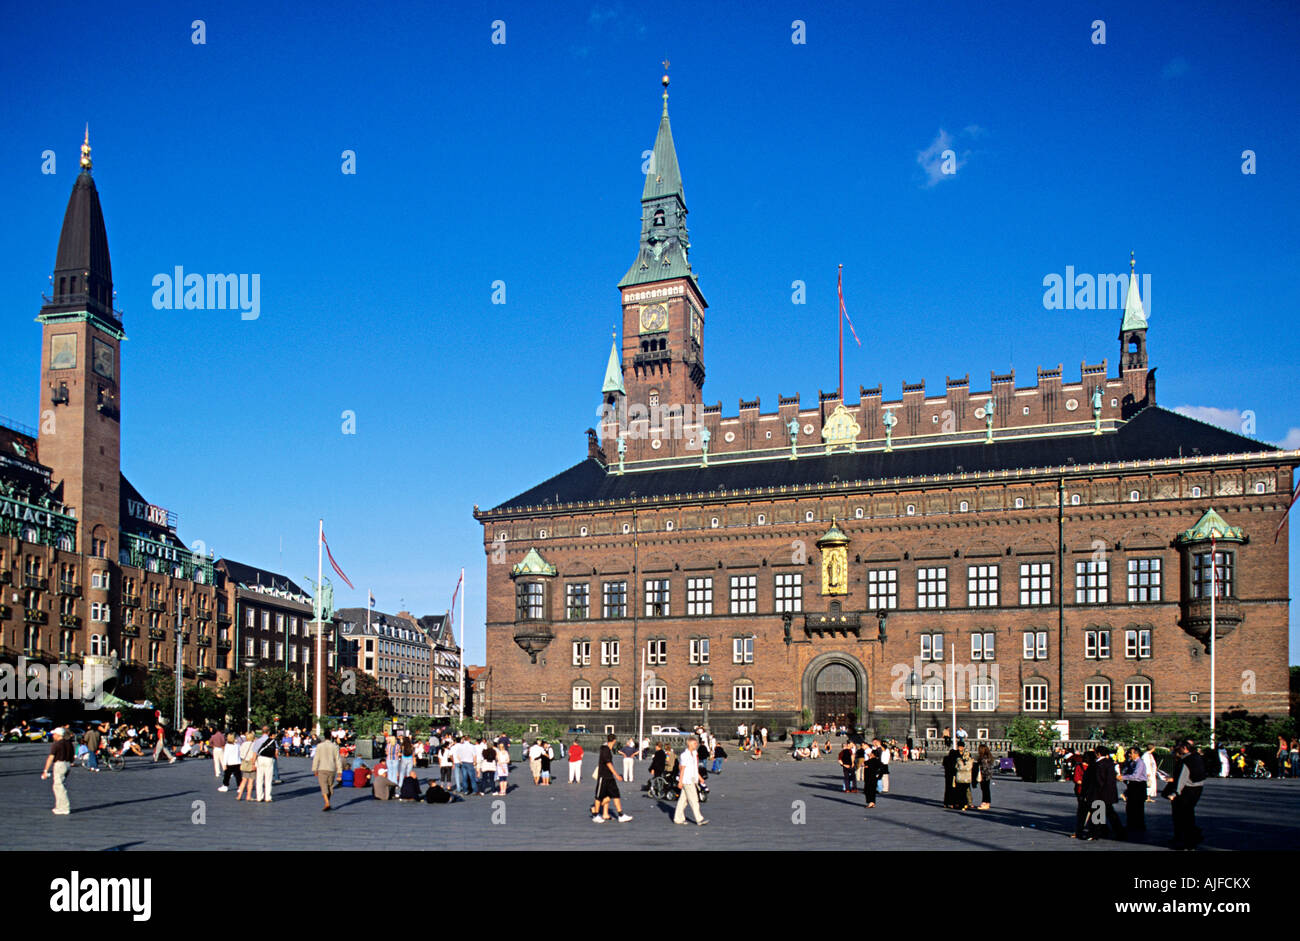 Copenhagen city hall and square Stock Photo